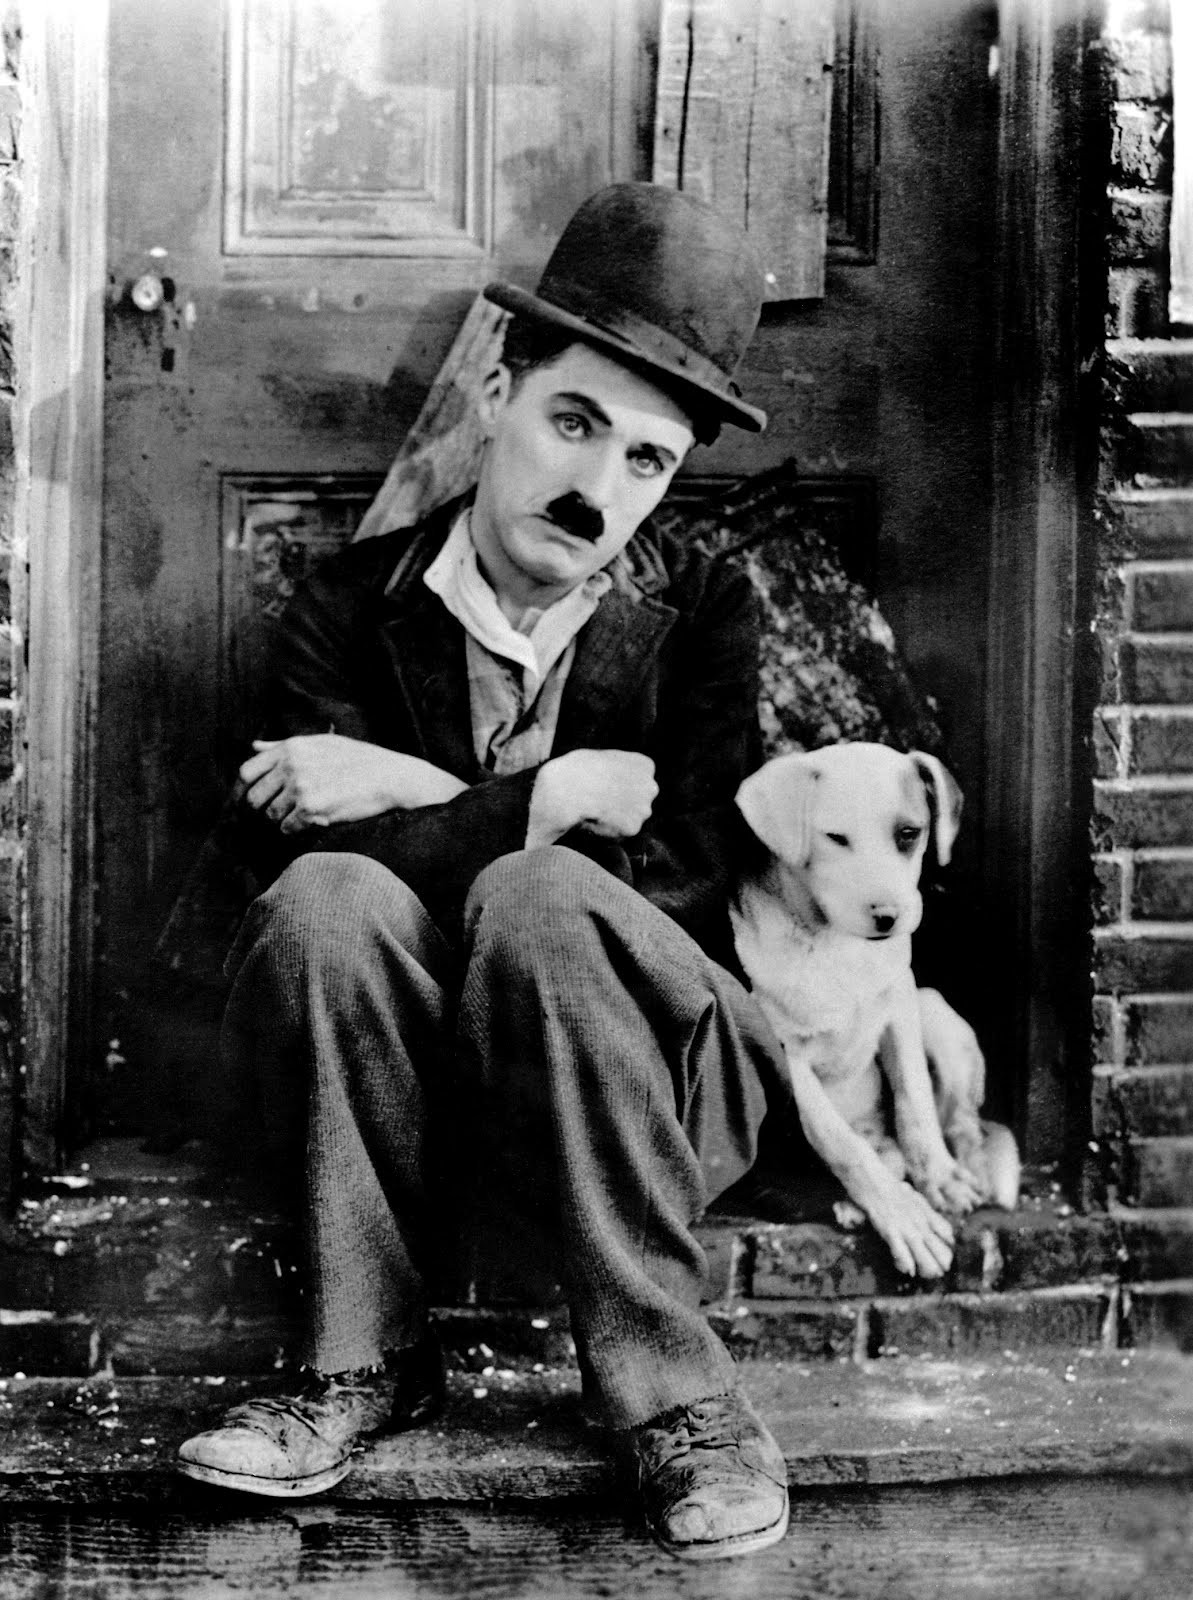 General 1193x1600 Charlie Chaplin The Tramp movies actor vintage sitting dog